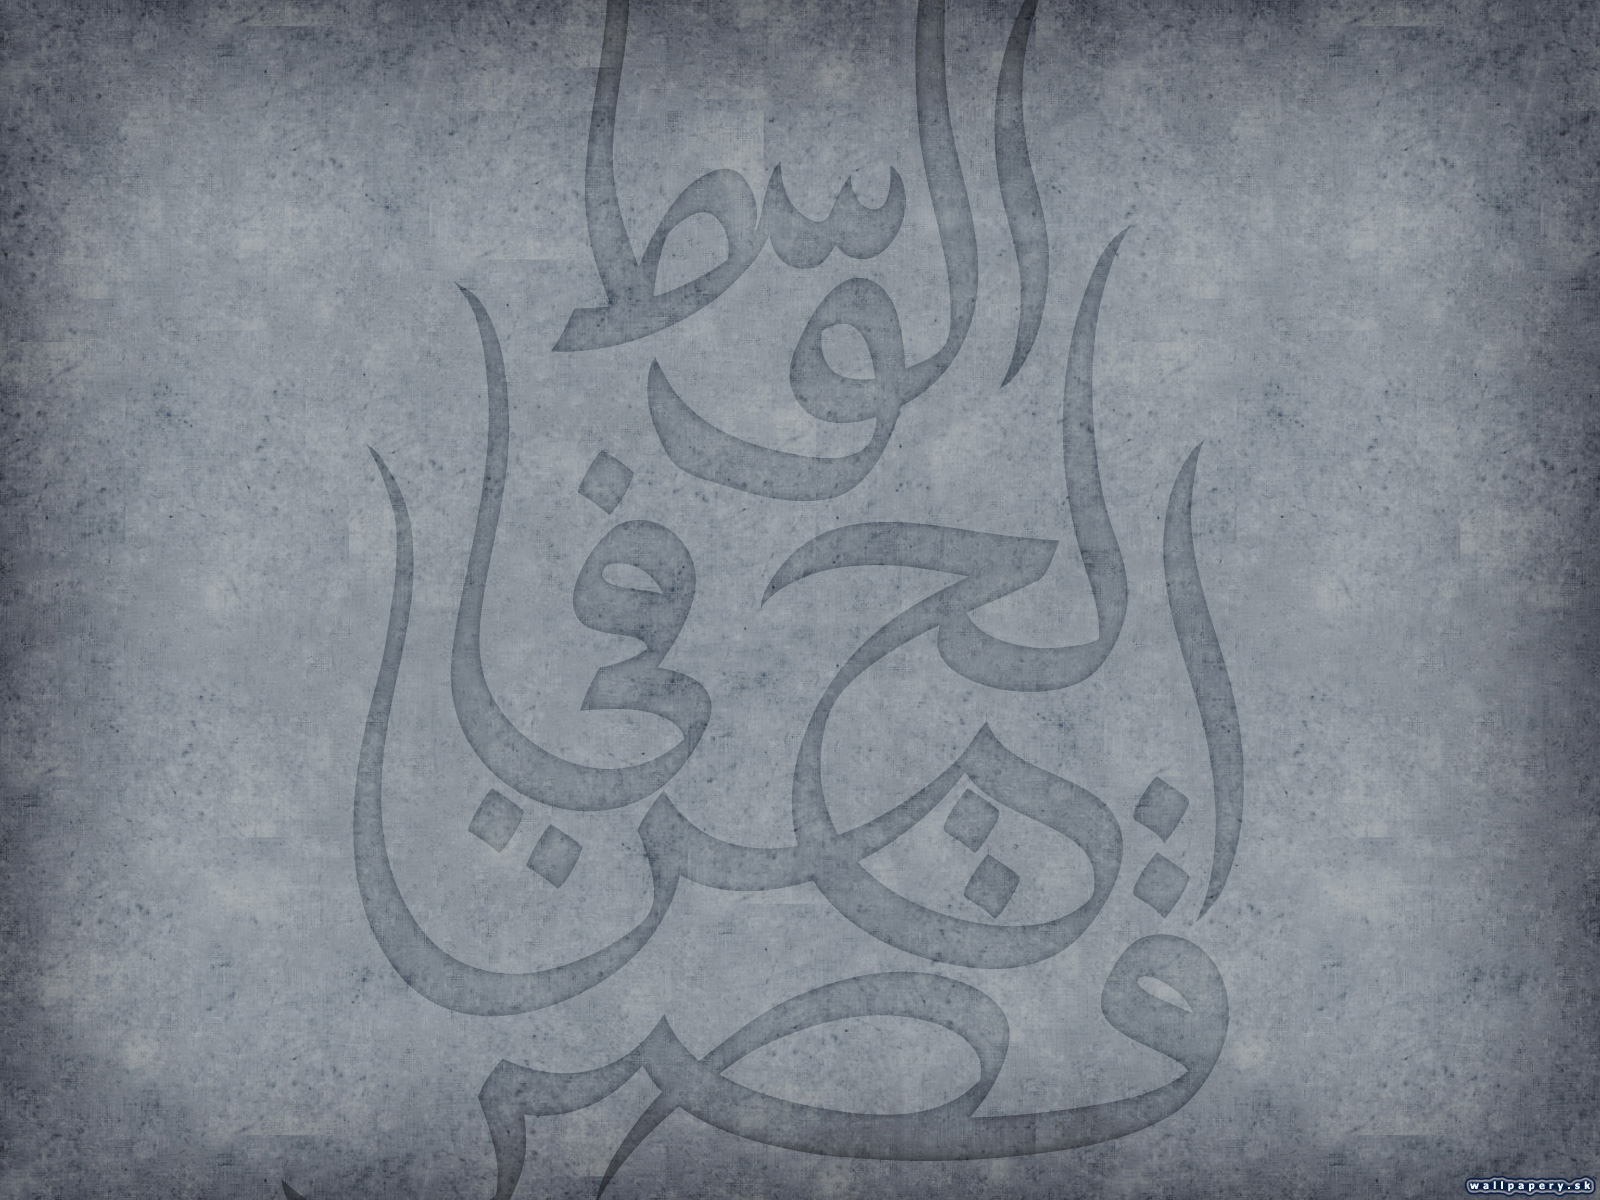 Qasir Al-Wasat: A Night in-Between - wallpaper 5